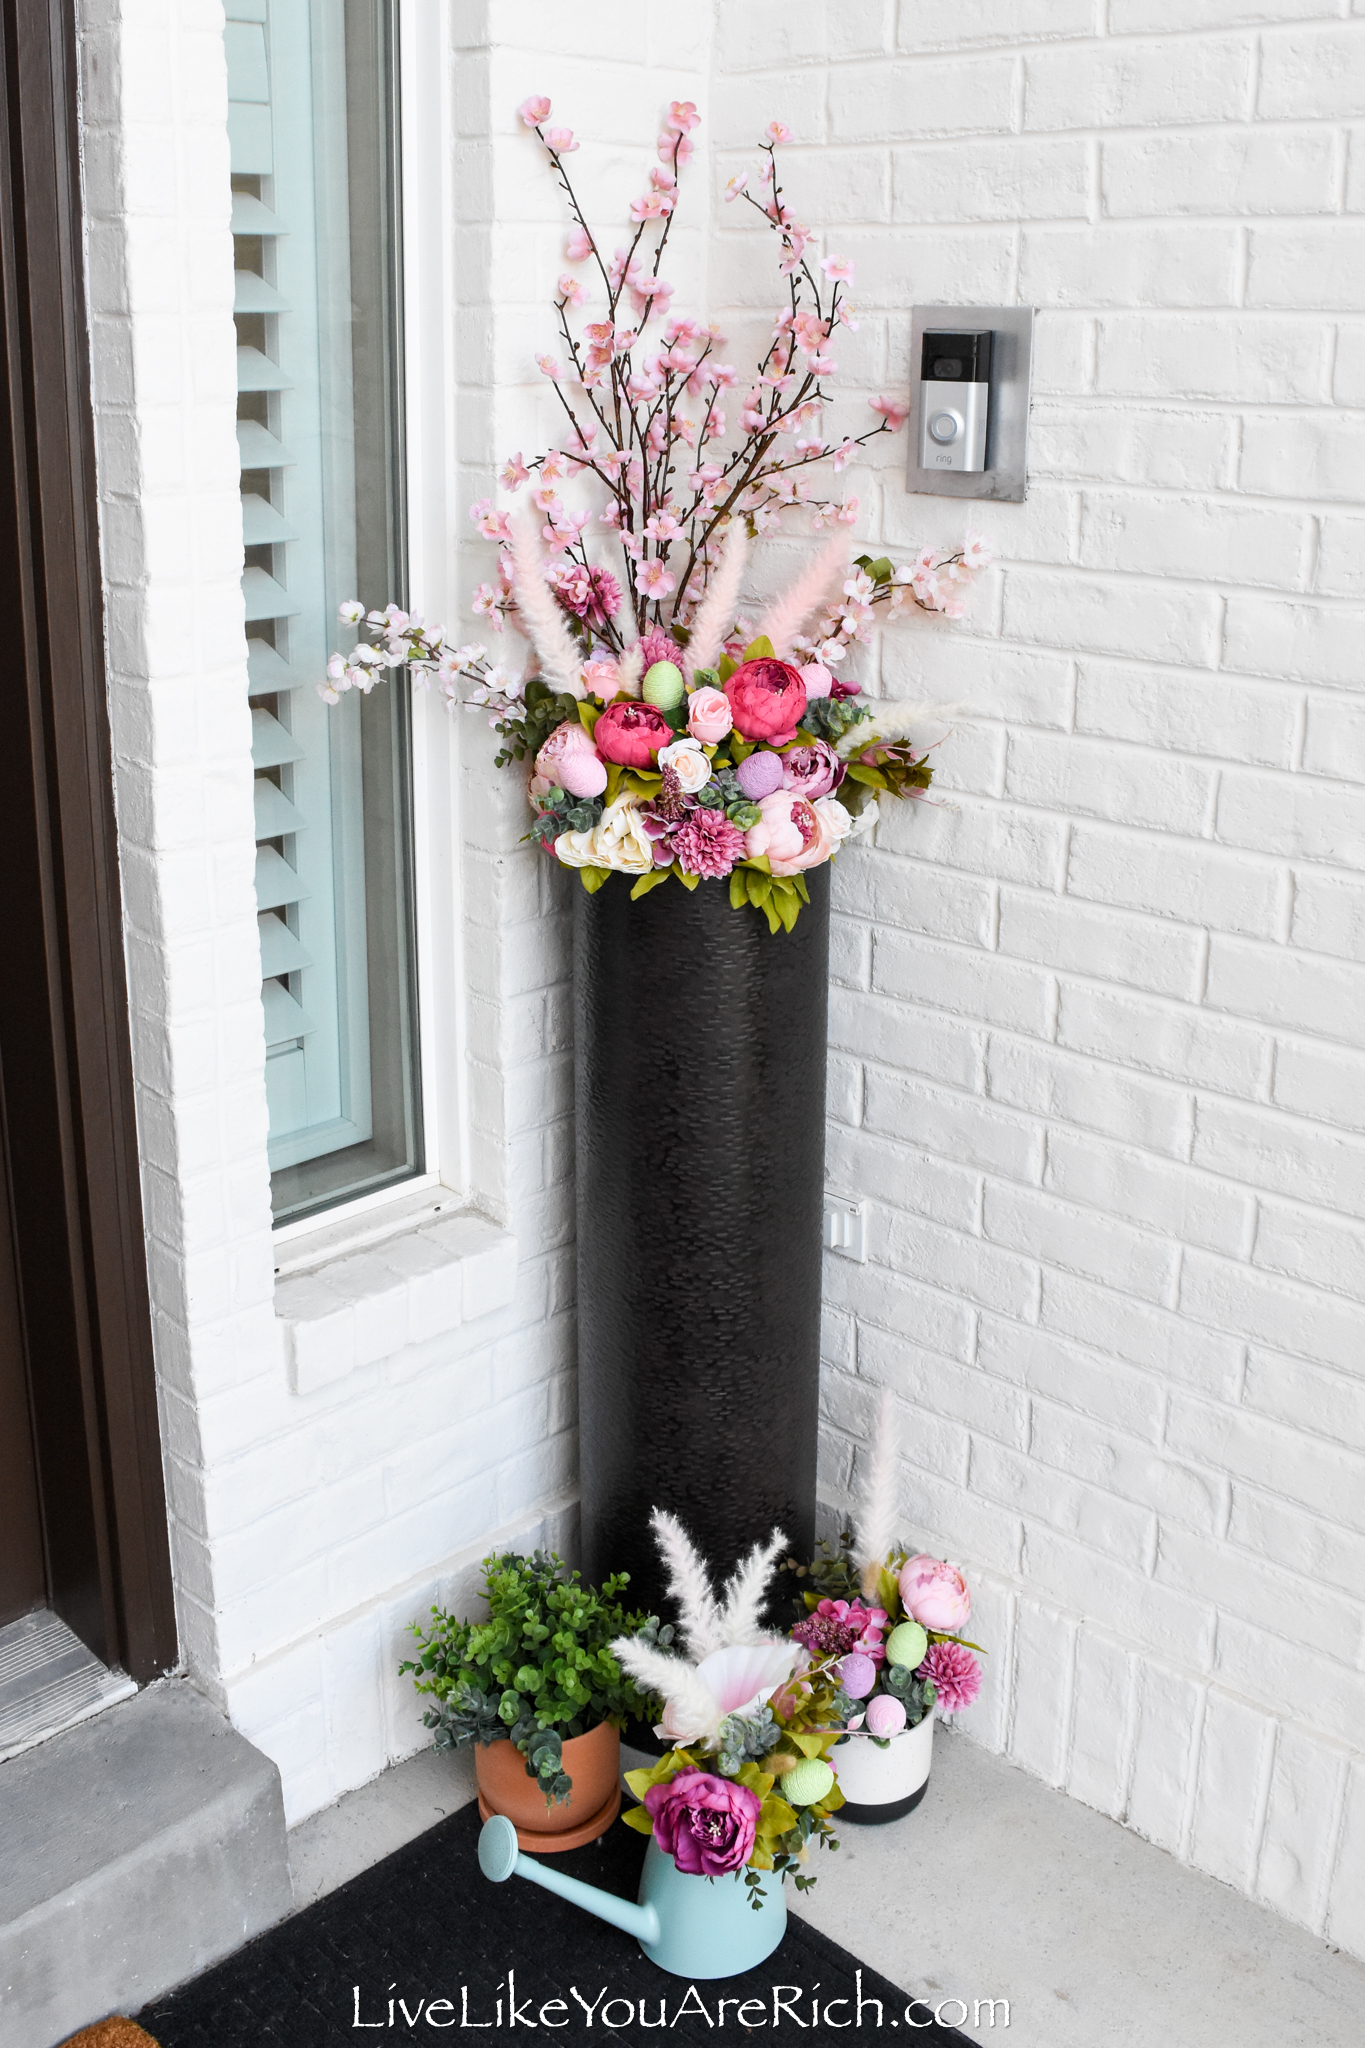 Easter Floral Front Door Decor. 